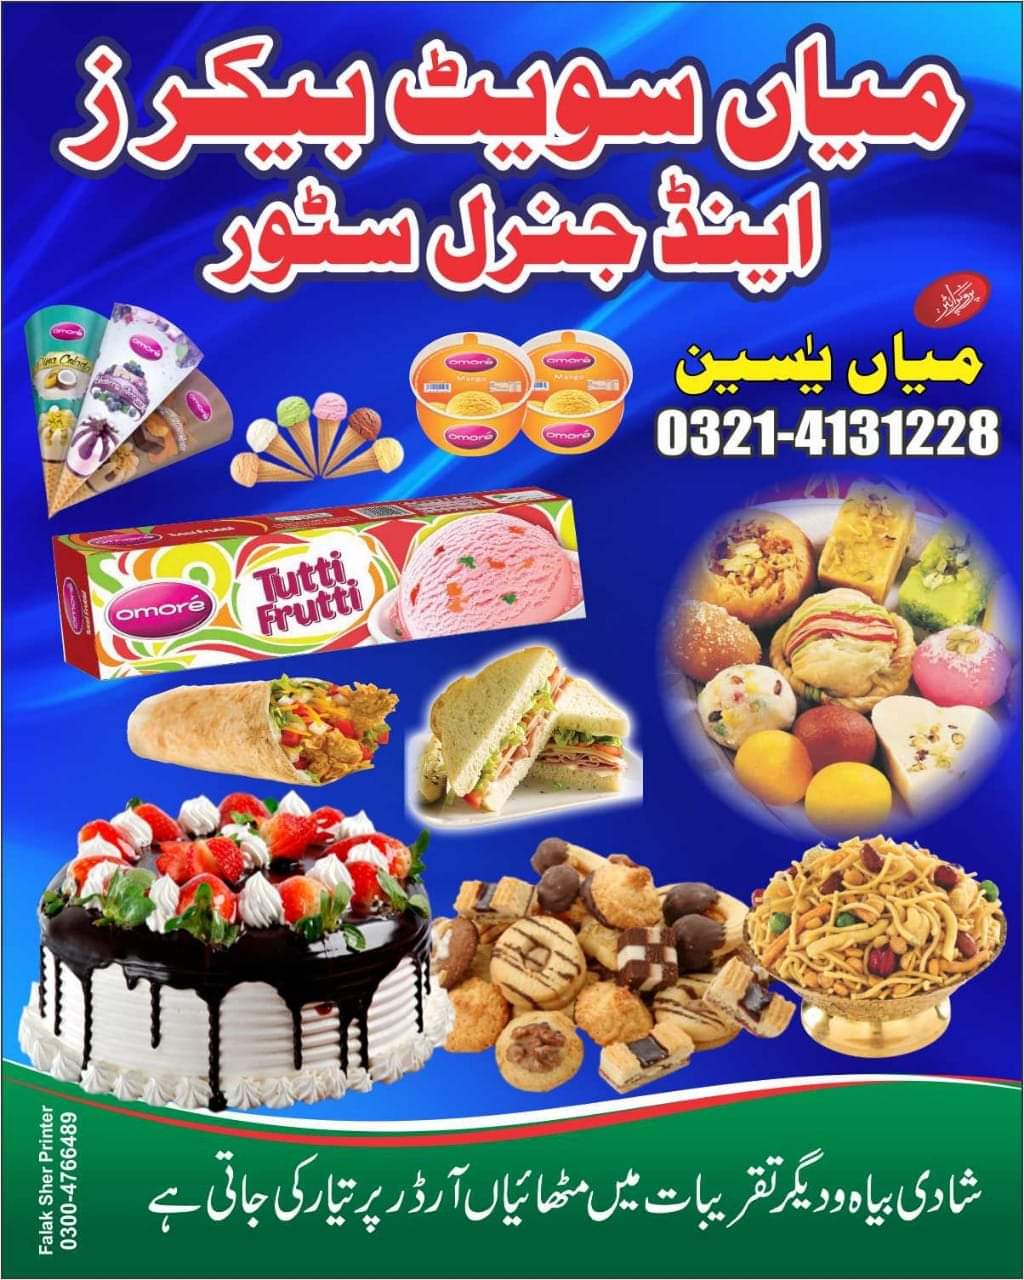 Mian Sweet Bakers & Yasin General store